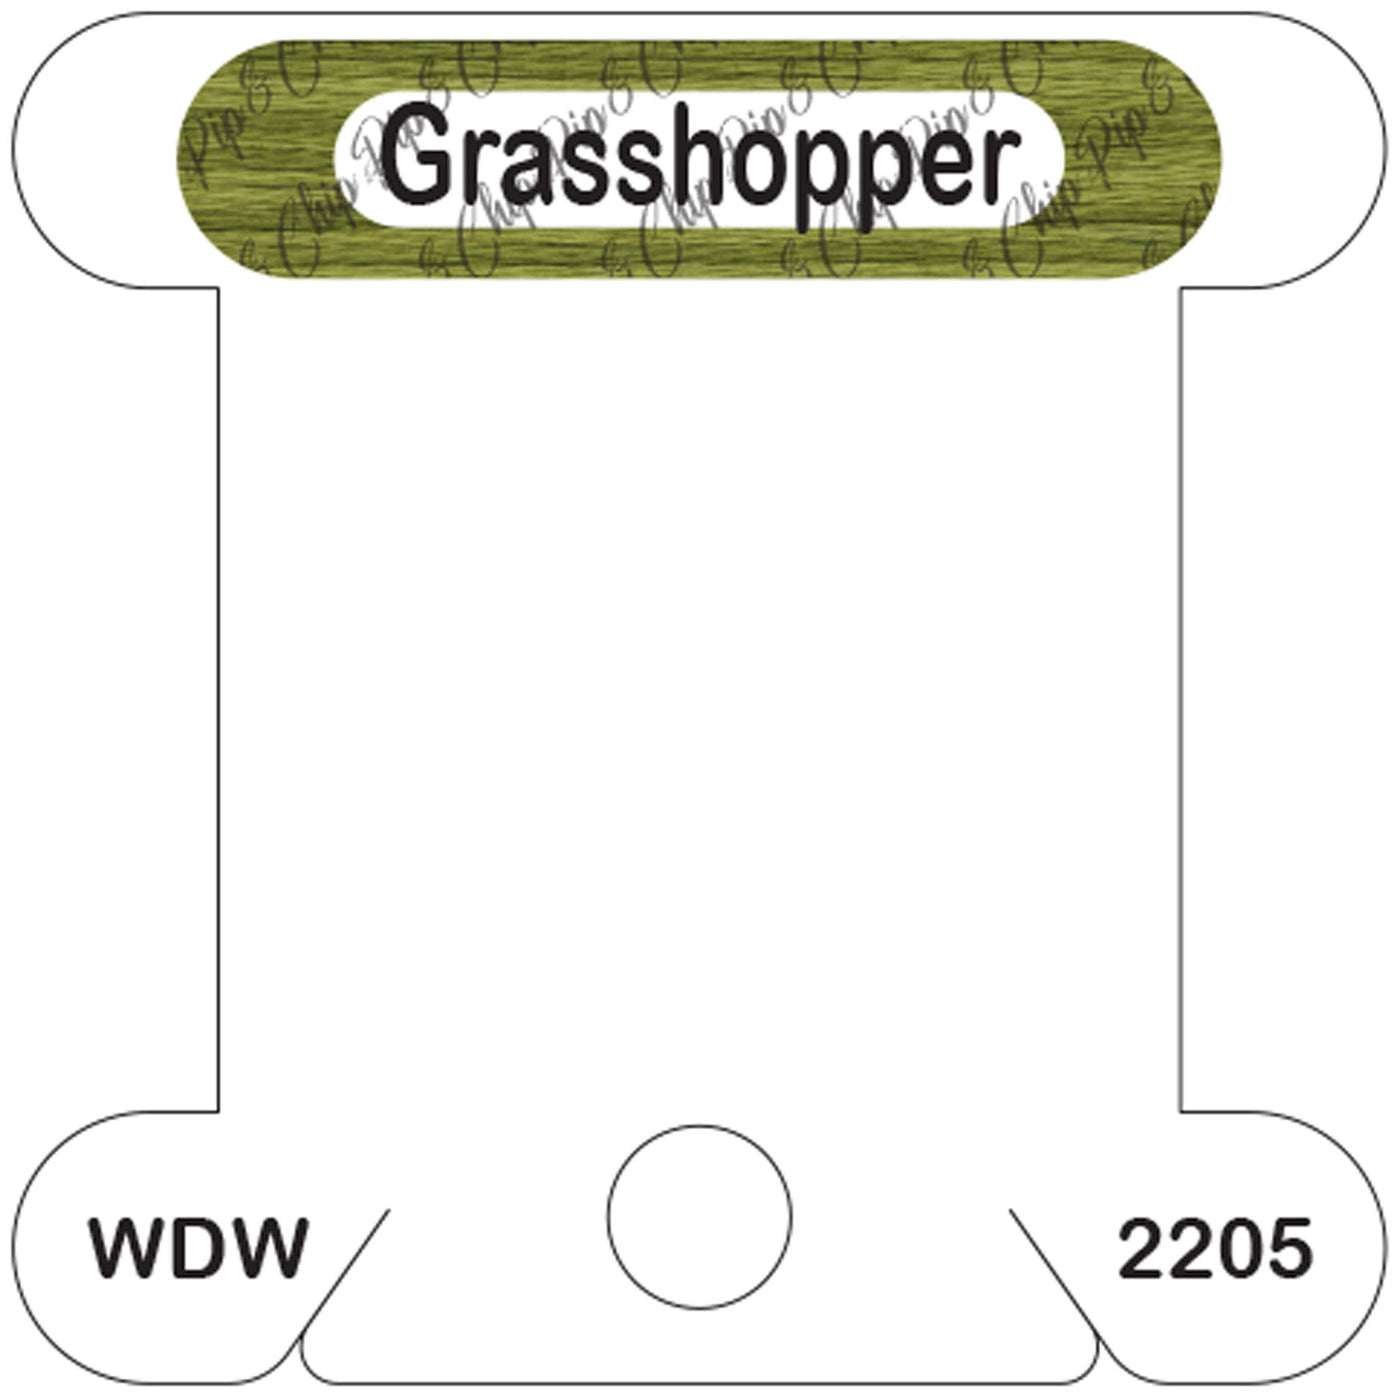 WDW Grasshopper acrylic bobbin